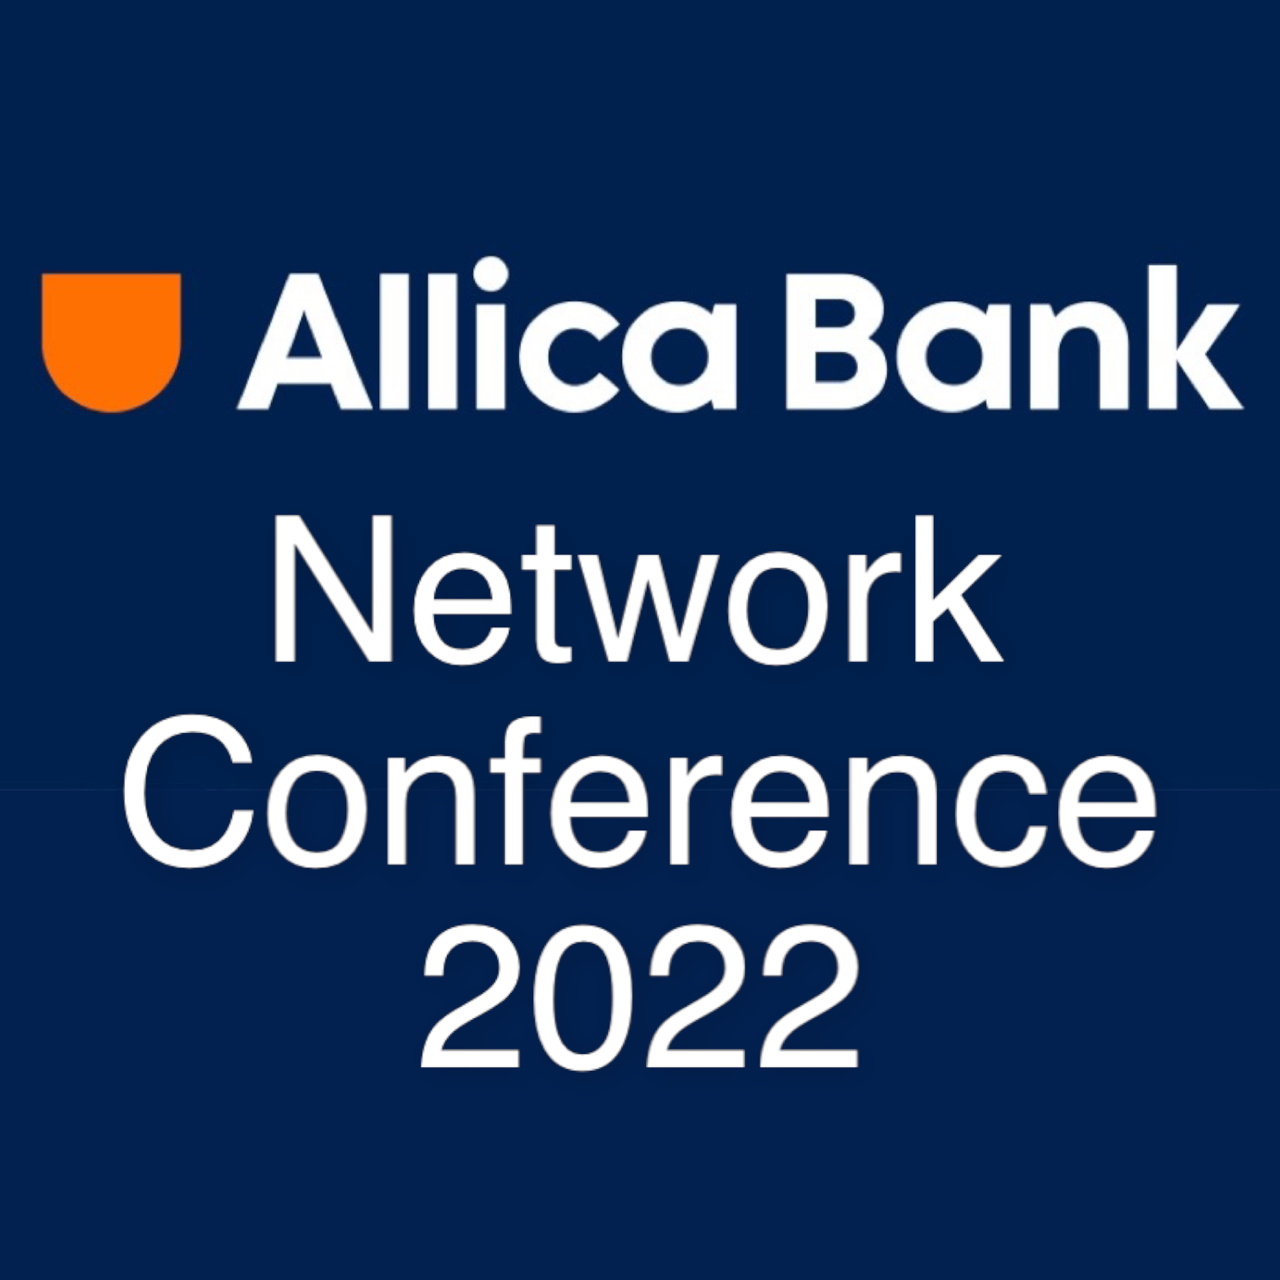 Allica Bank Network Conference 2022 scalextric simulator hire